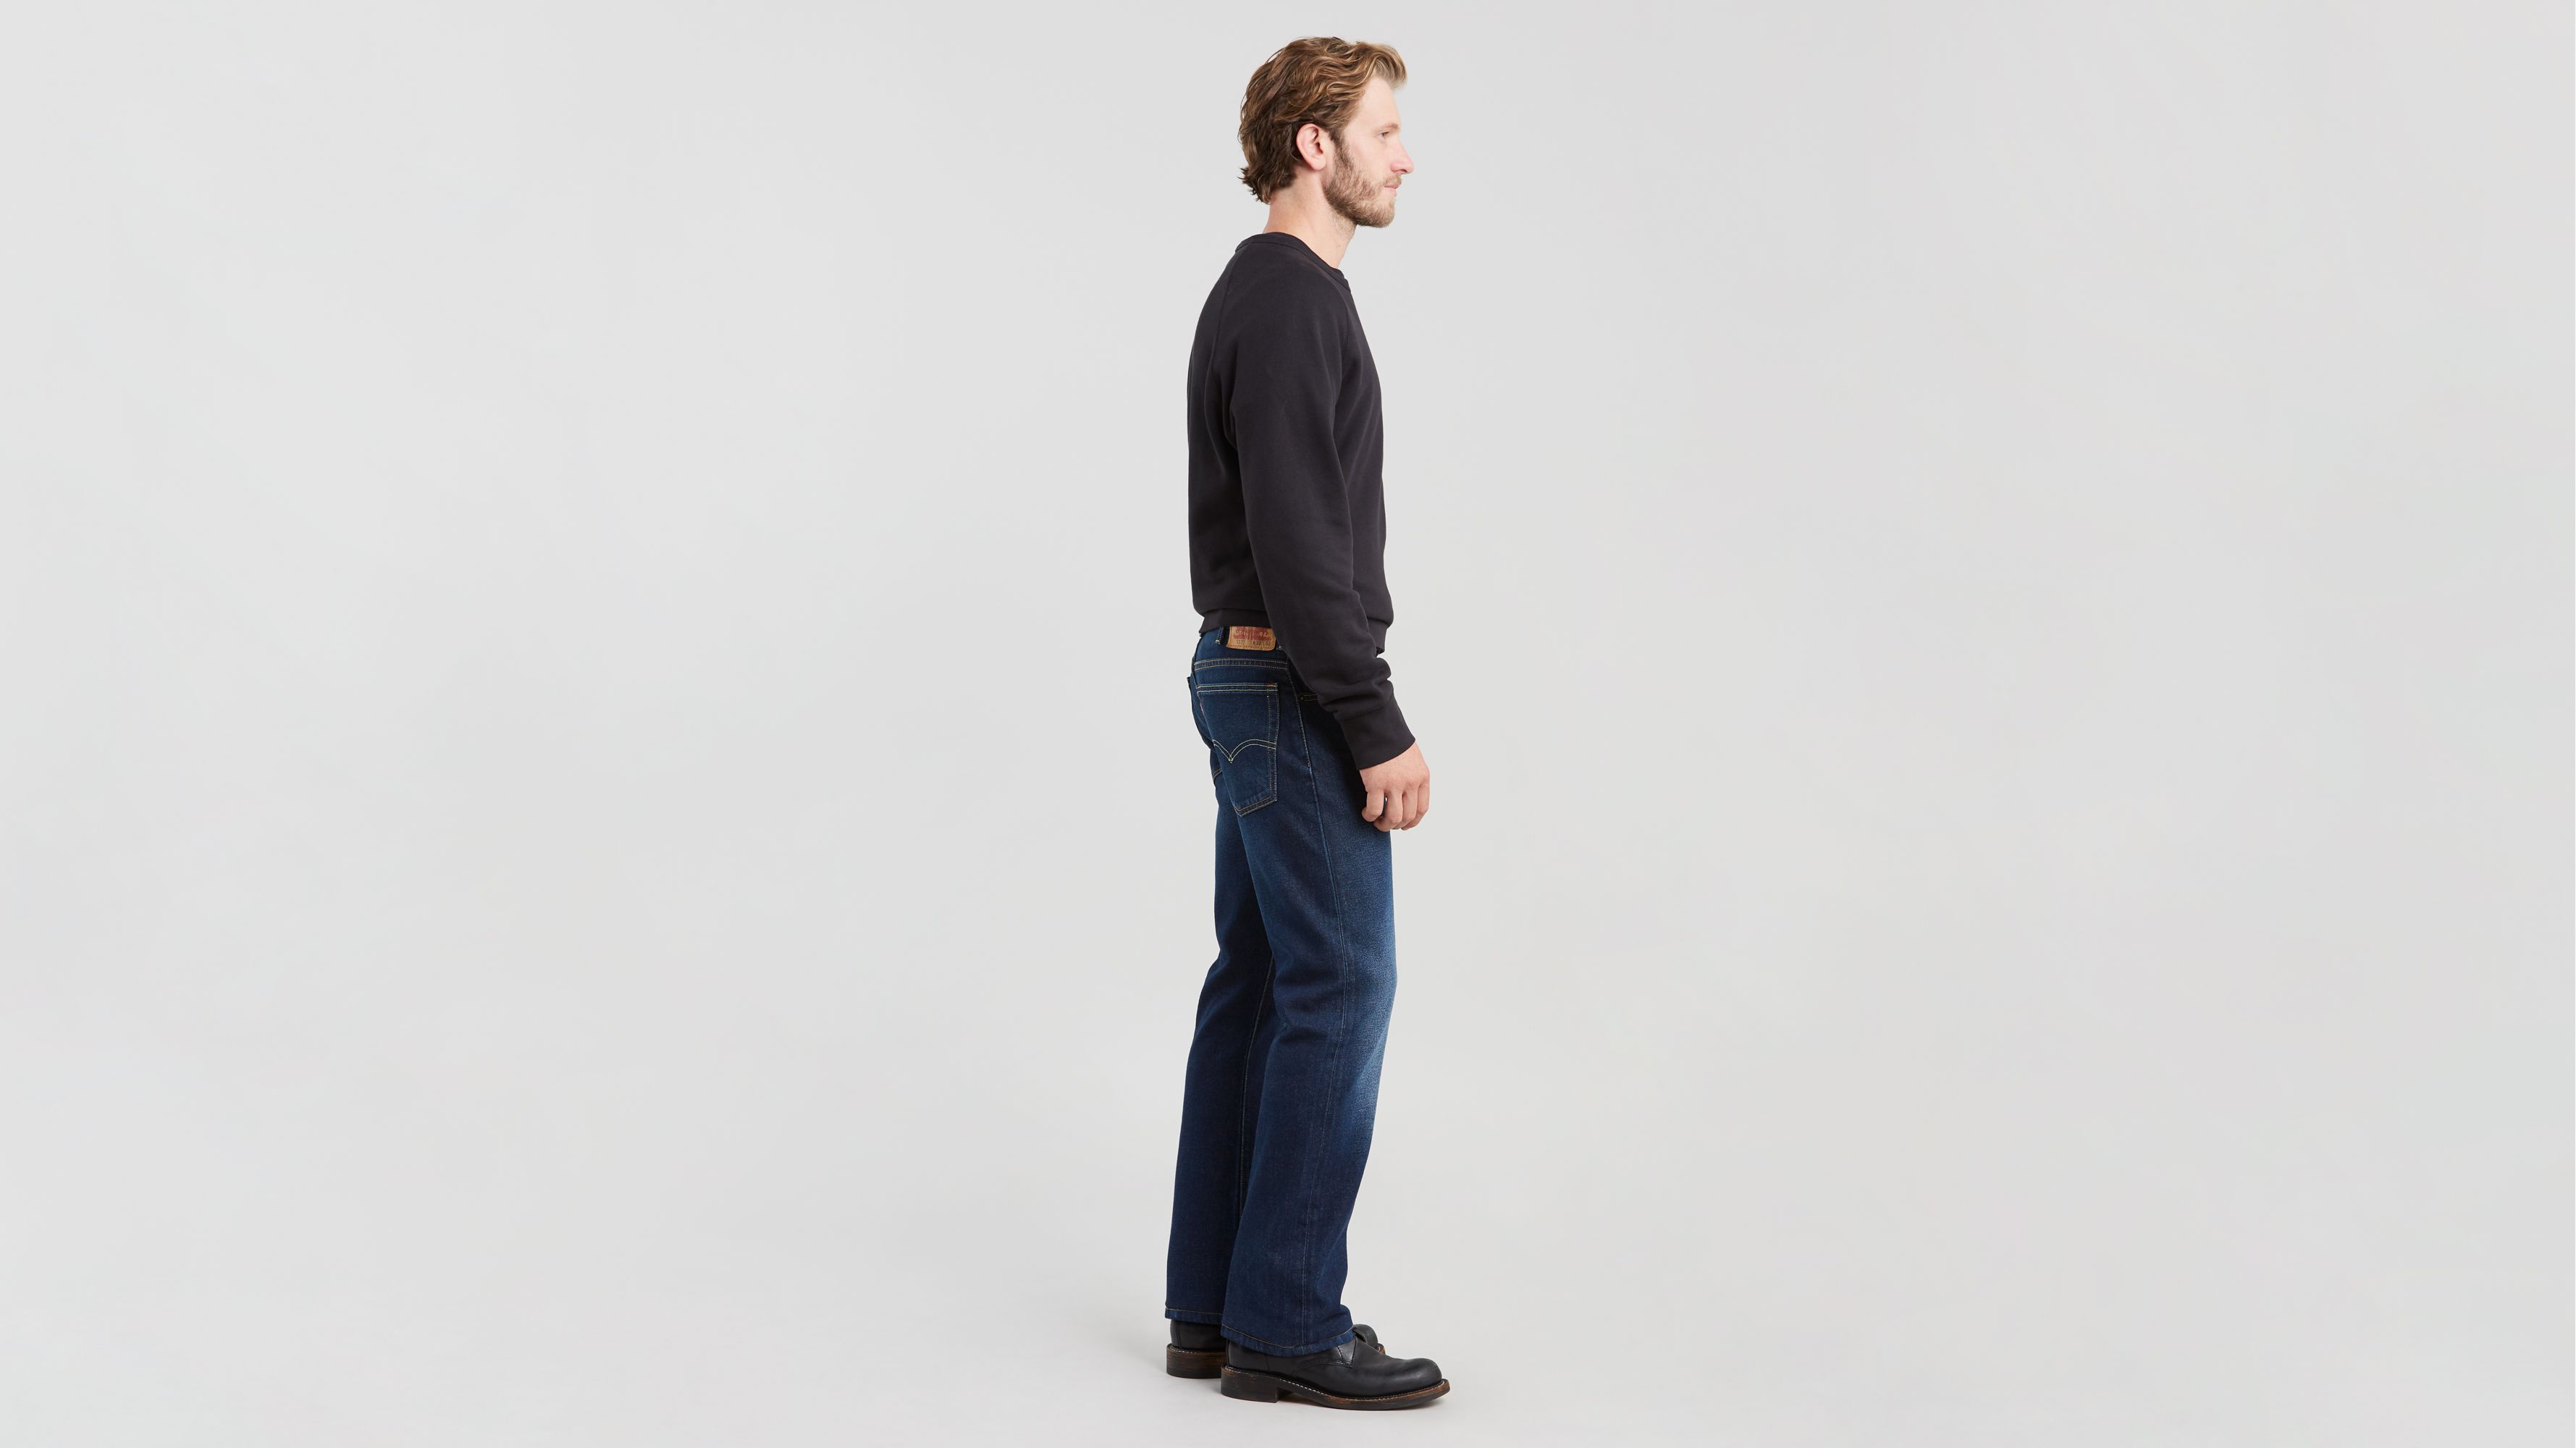 levis stretch bootcut jeans mens